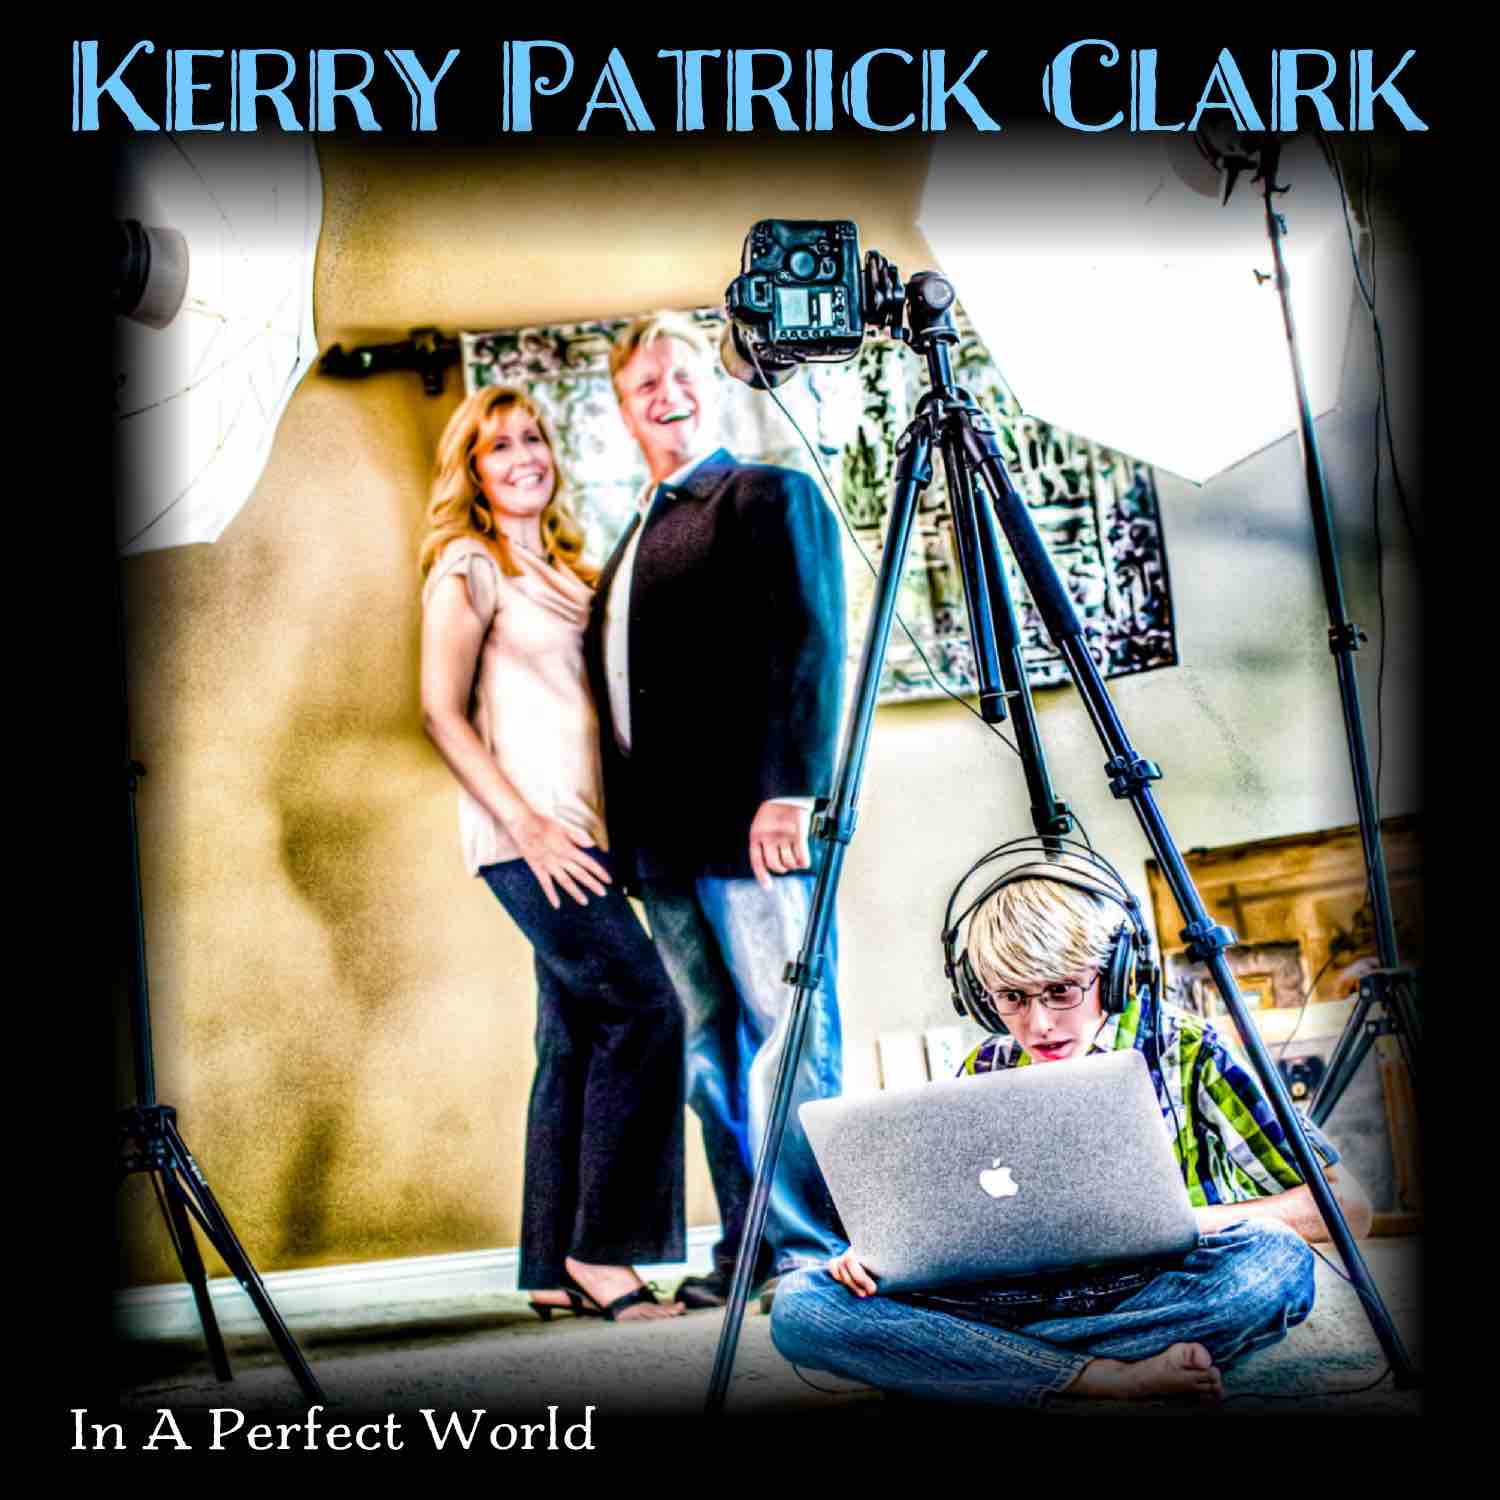 Kerry Patrick Clark